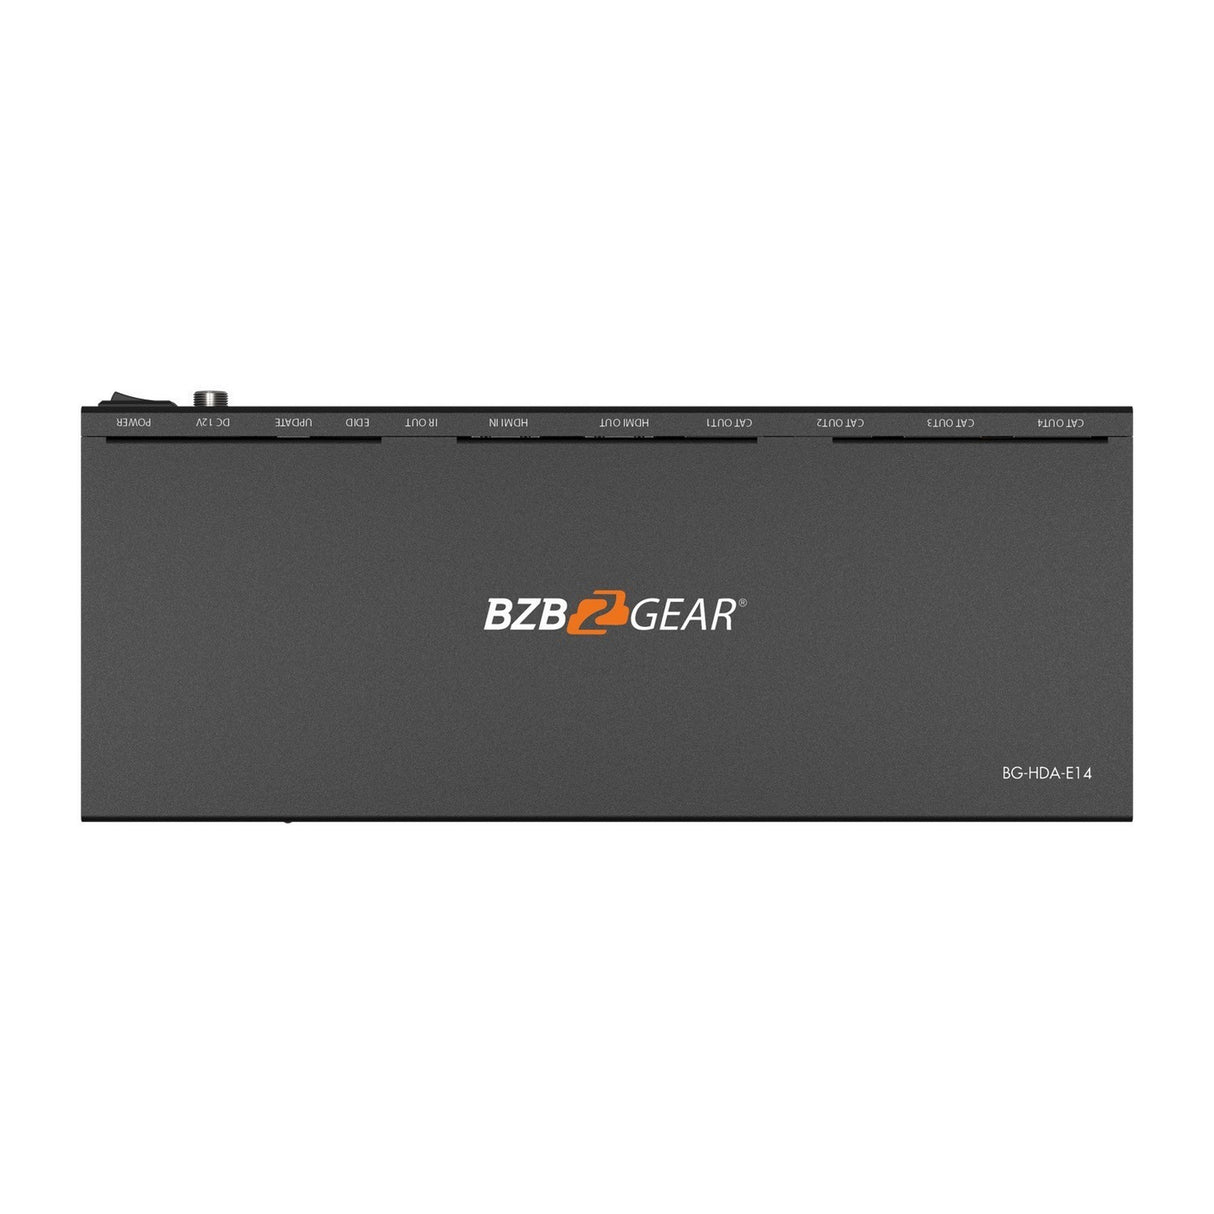 BZBGEAR BG-HDA-E14 1X4 1080P/4K30 HDMI Splitter/Distribution Amplifier